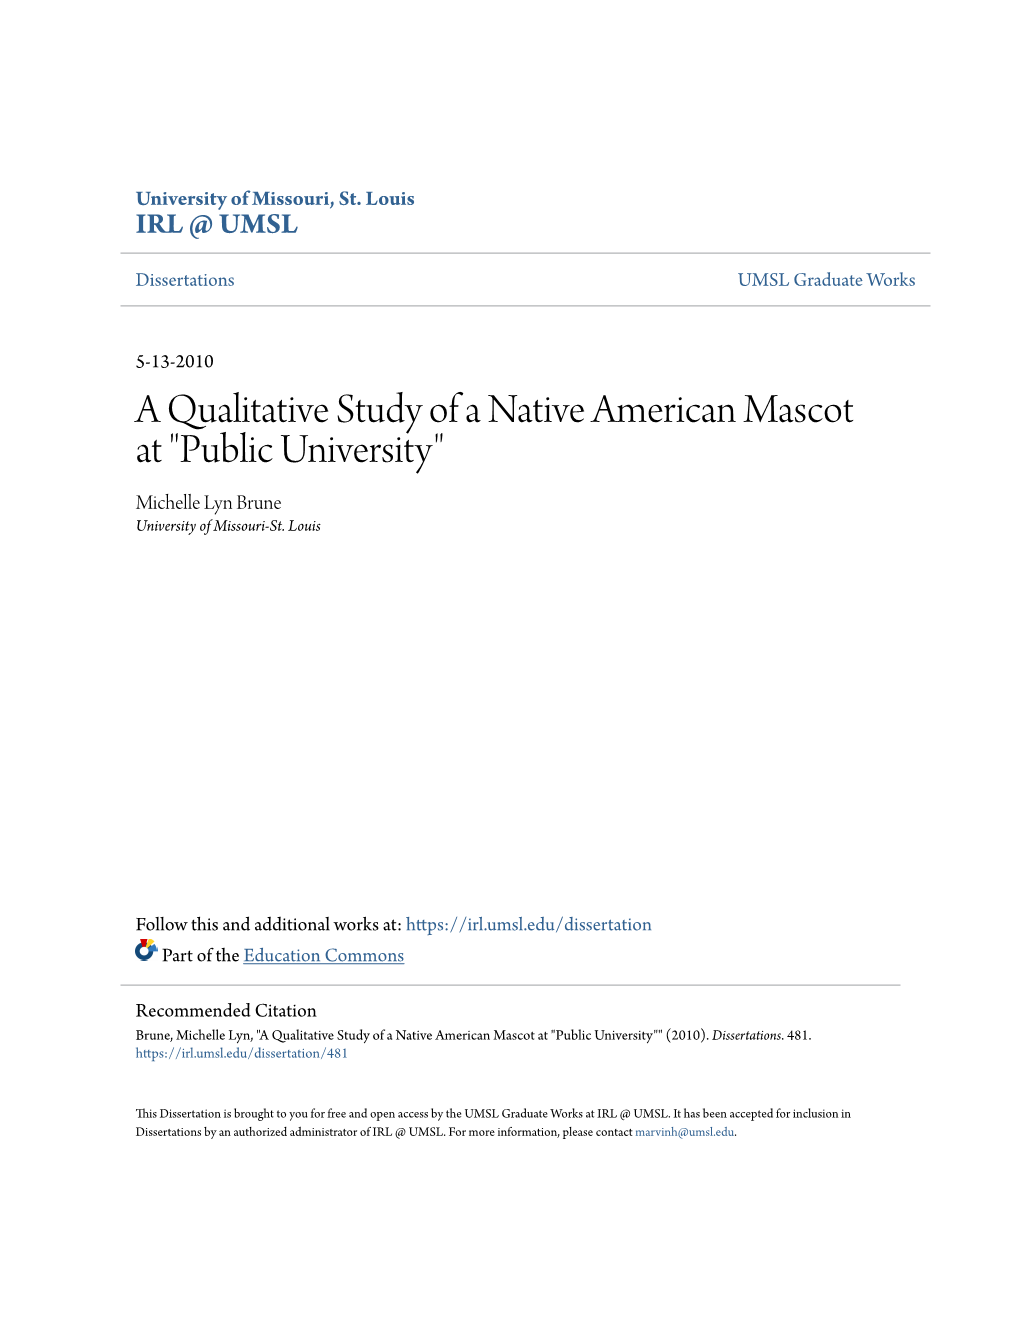 A Qualitative Study of a Native American Mascot at "Public University" Michelle Lyn Brune University of Missouri-St